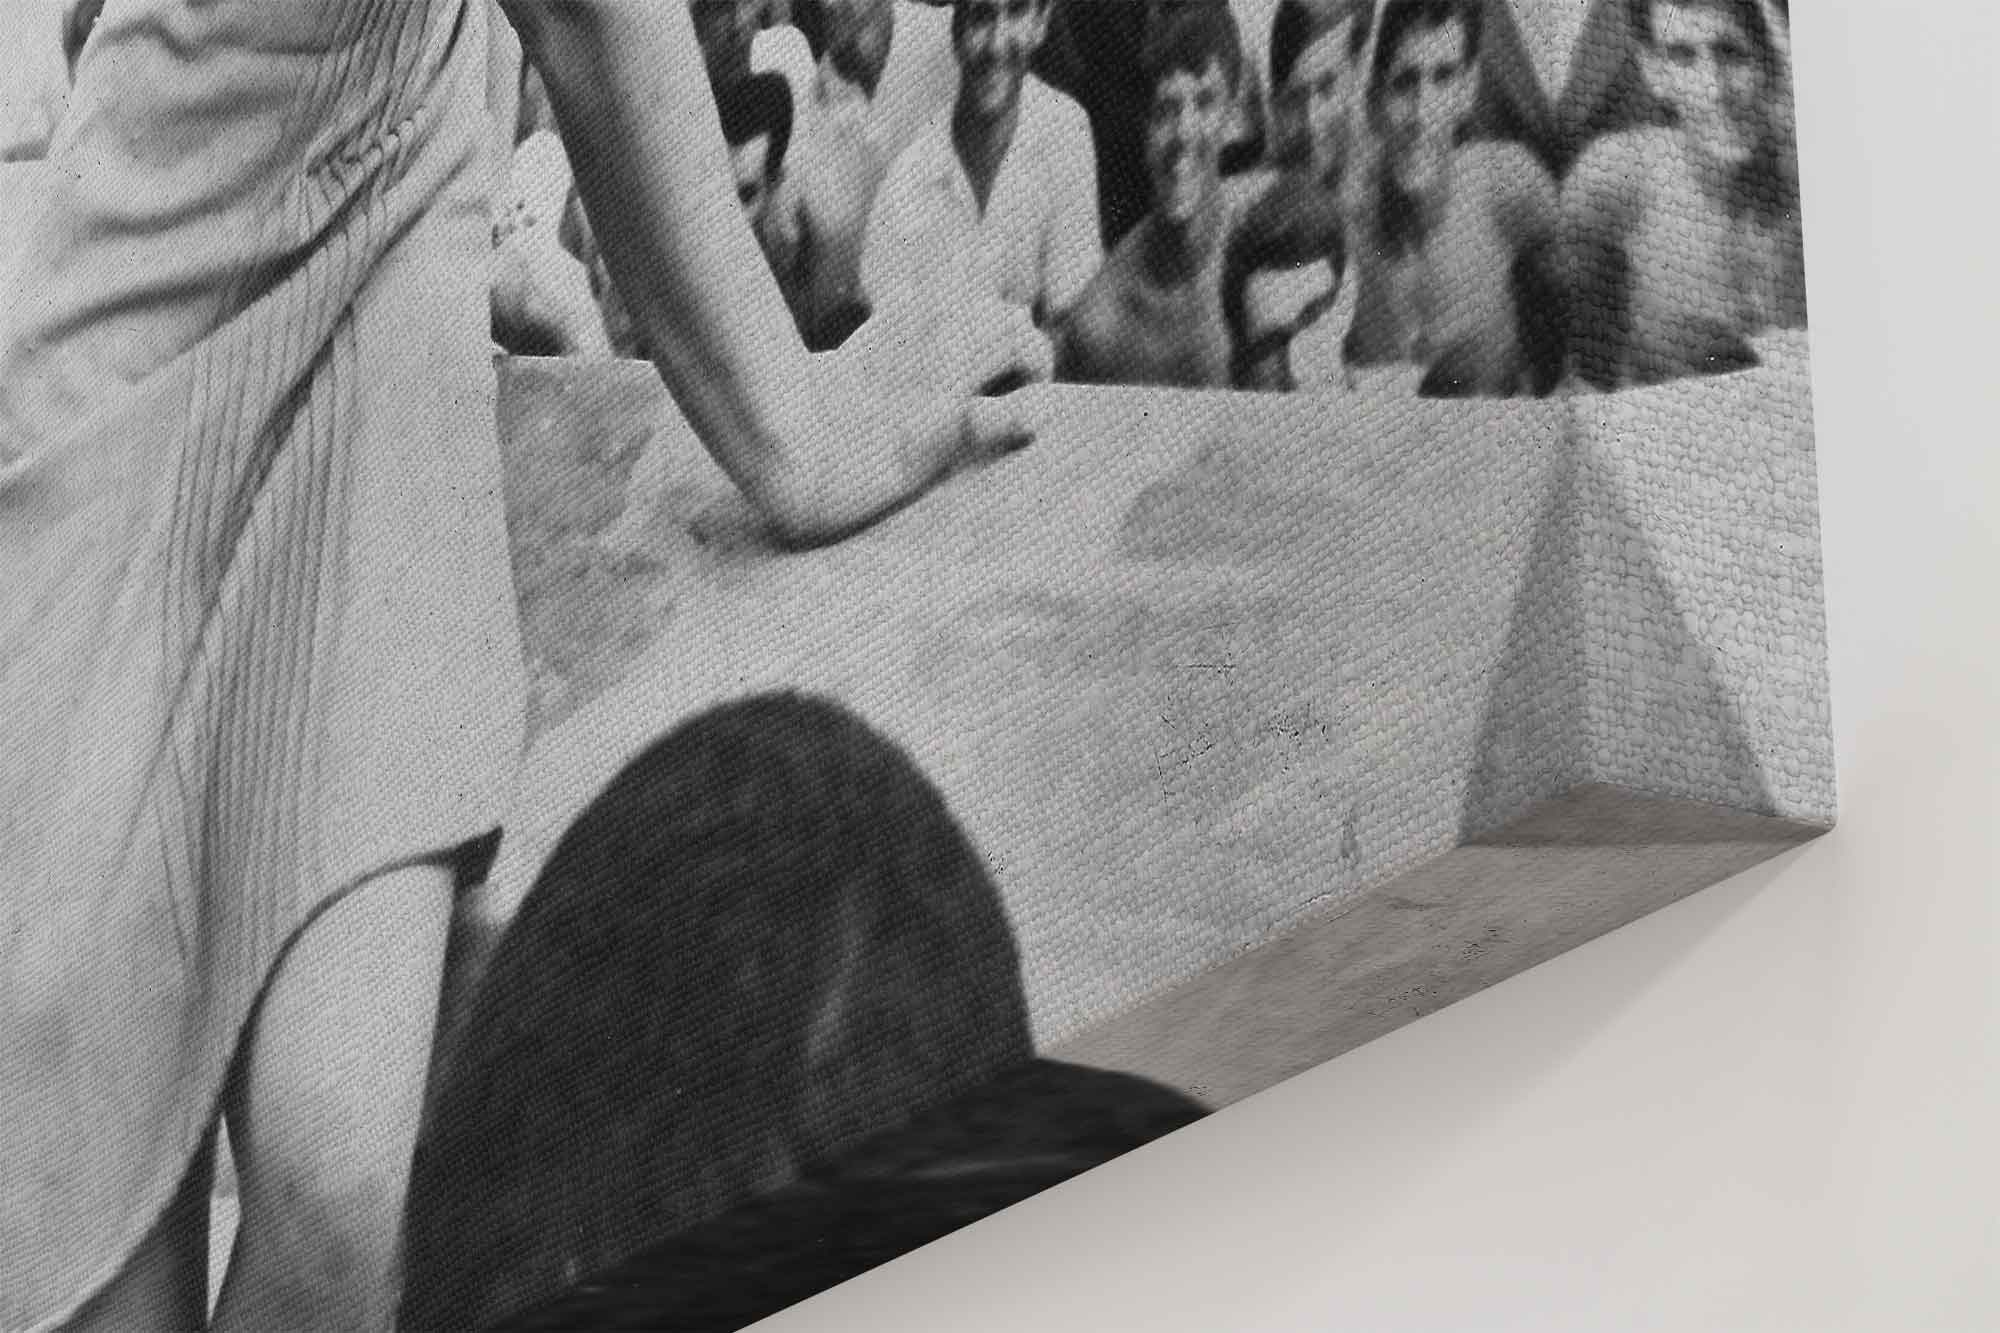 Brigitte Bardot Canvas, Vintage Photo 1964 In Brazil - Brigitte Bardot Canvas Print - Hollywood Silver Screen Star - WallArtPrints4U